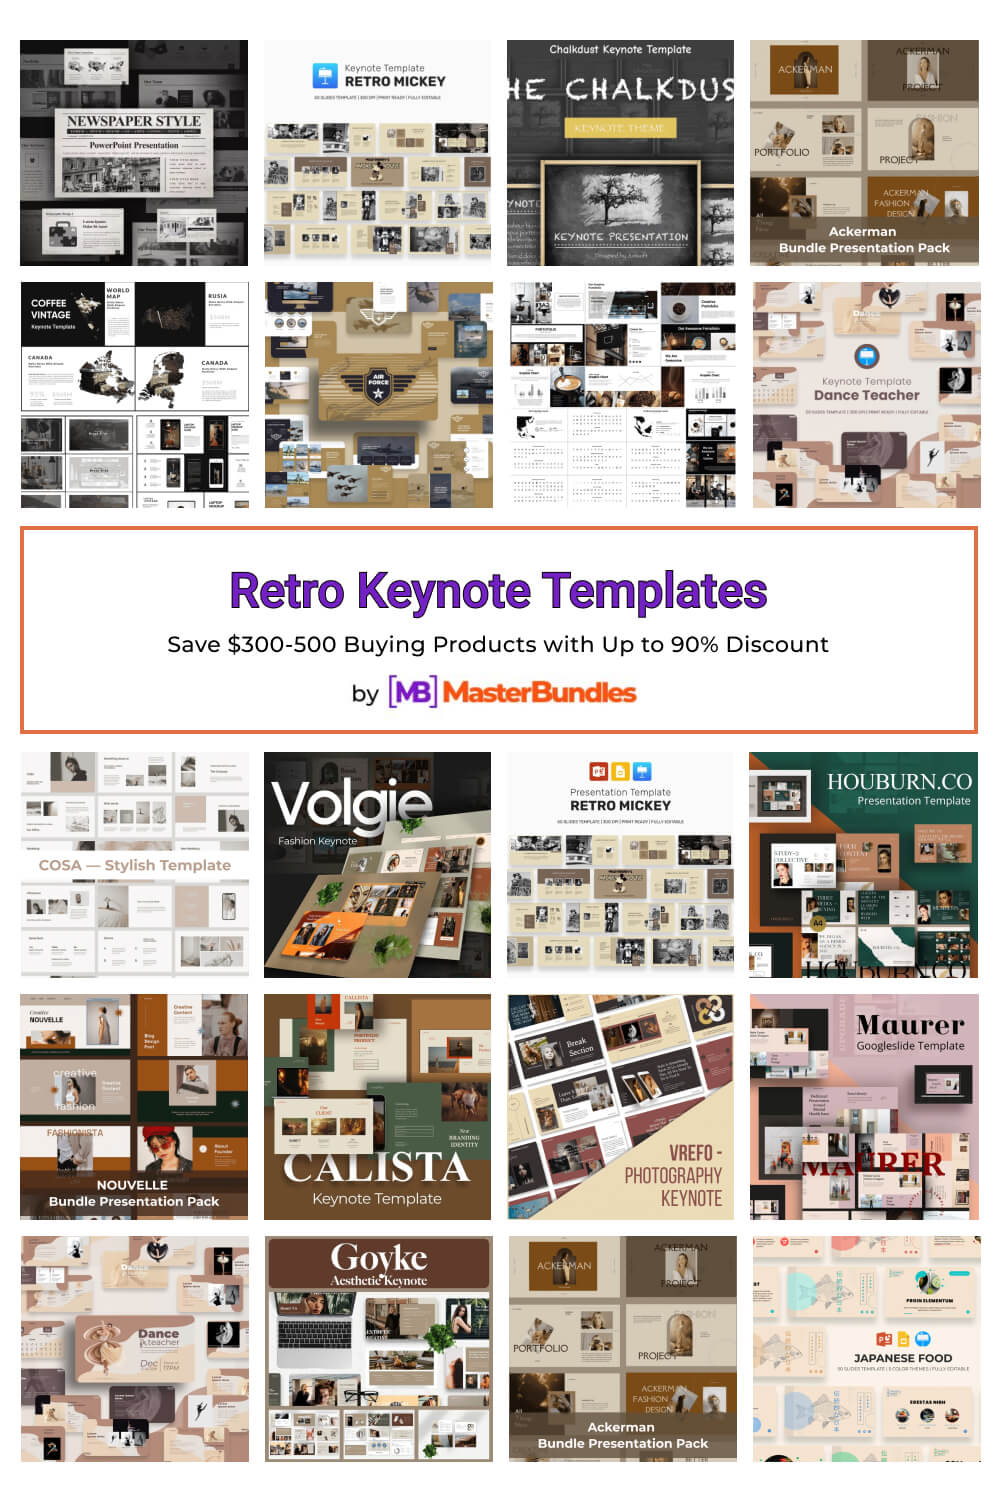 retro keynote templates pinterest image.